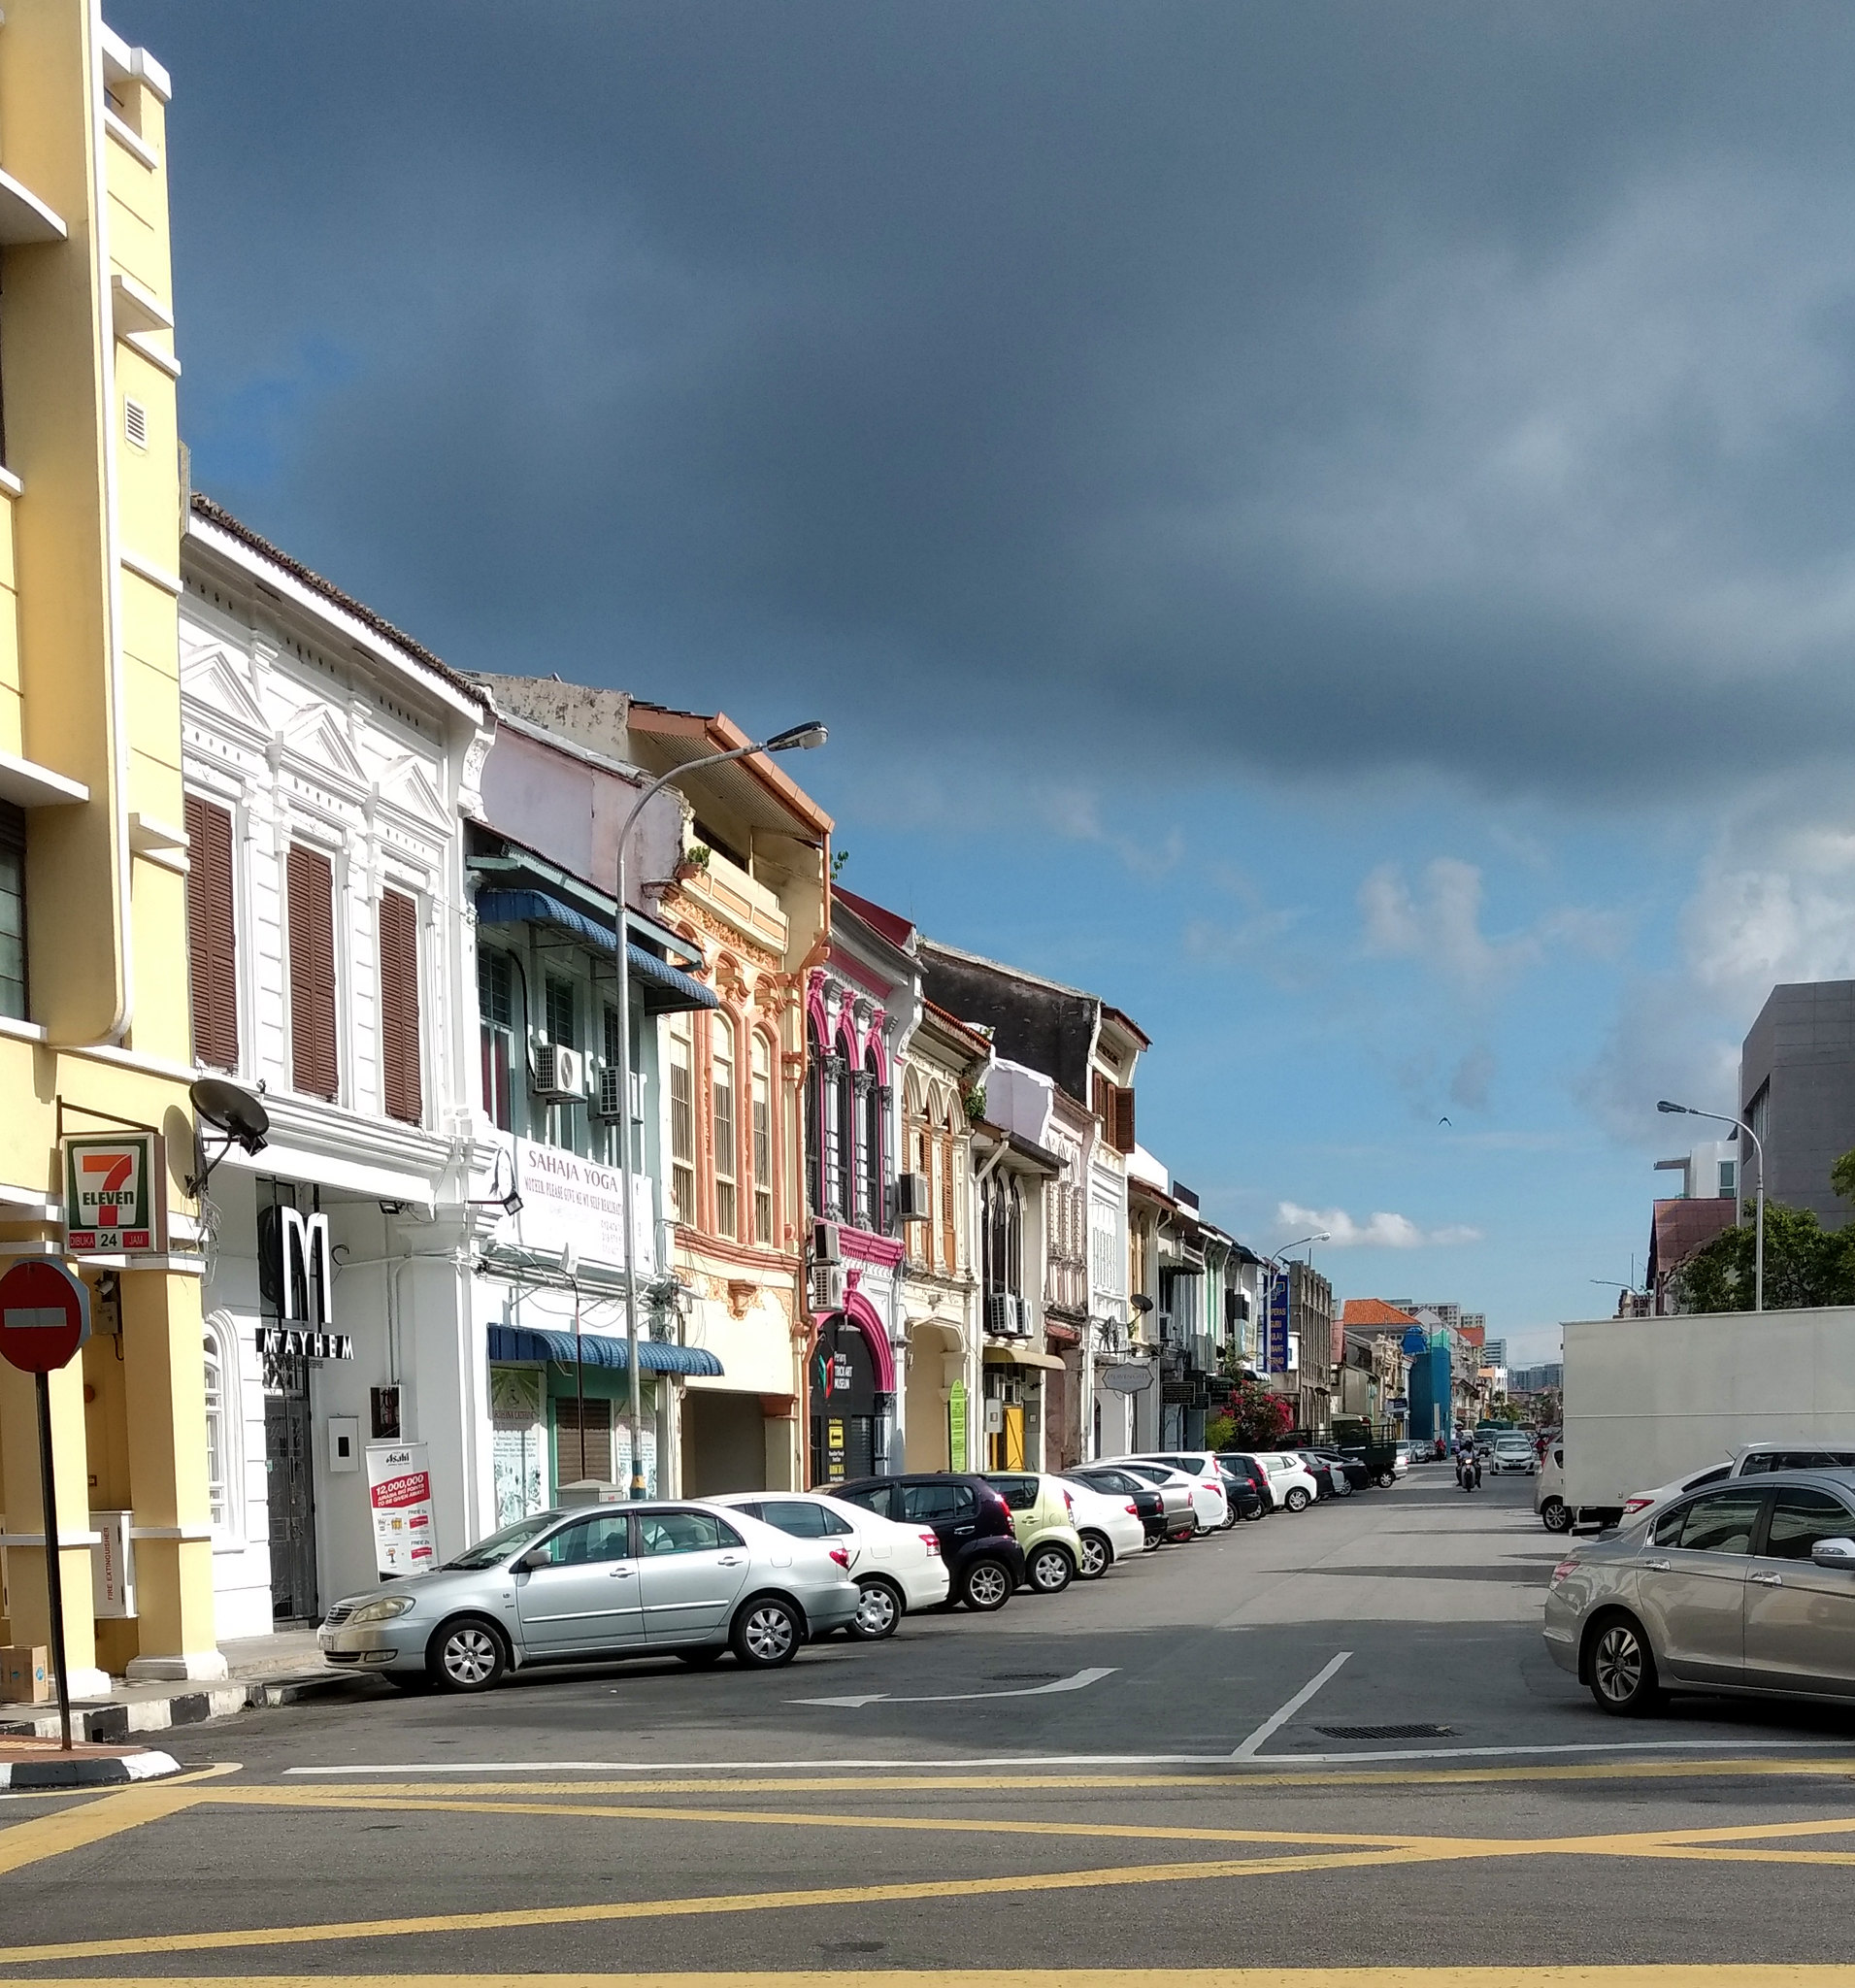 Magical sky and a beautiful neighborhood, George Town - Penang